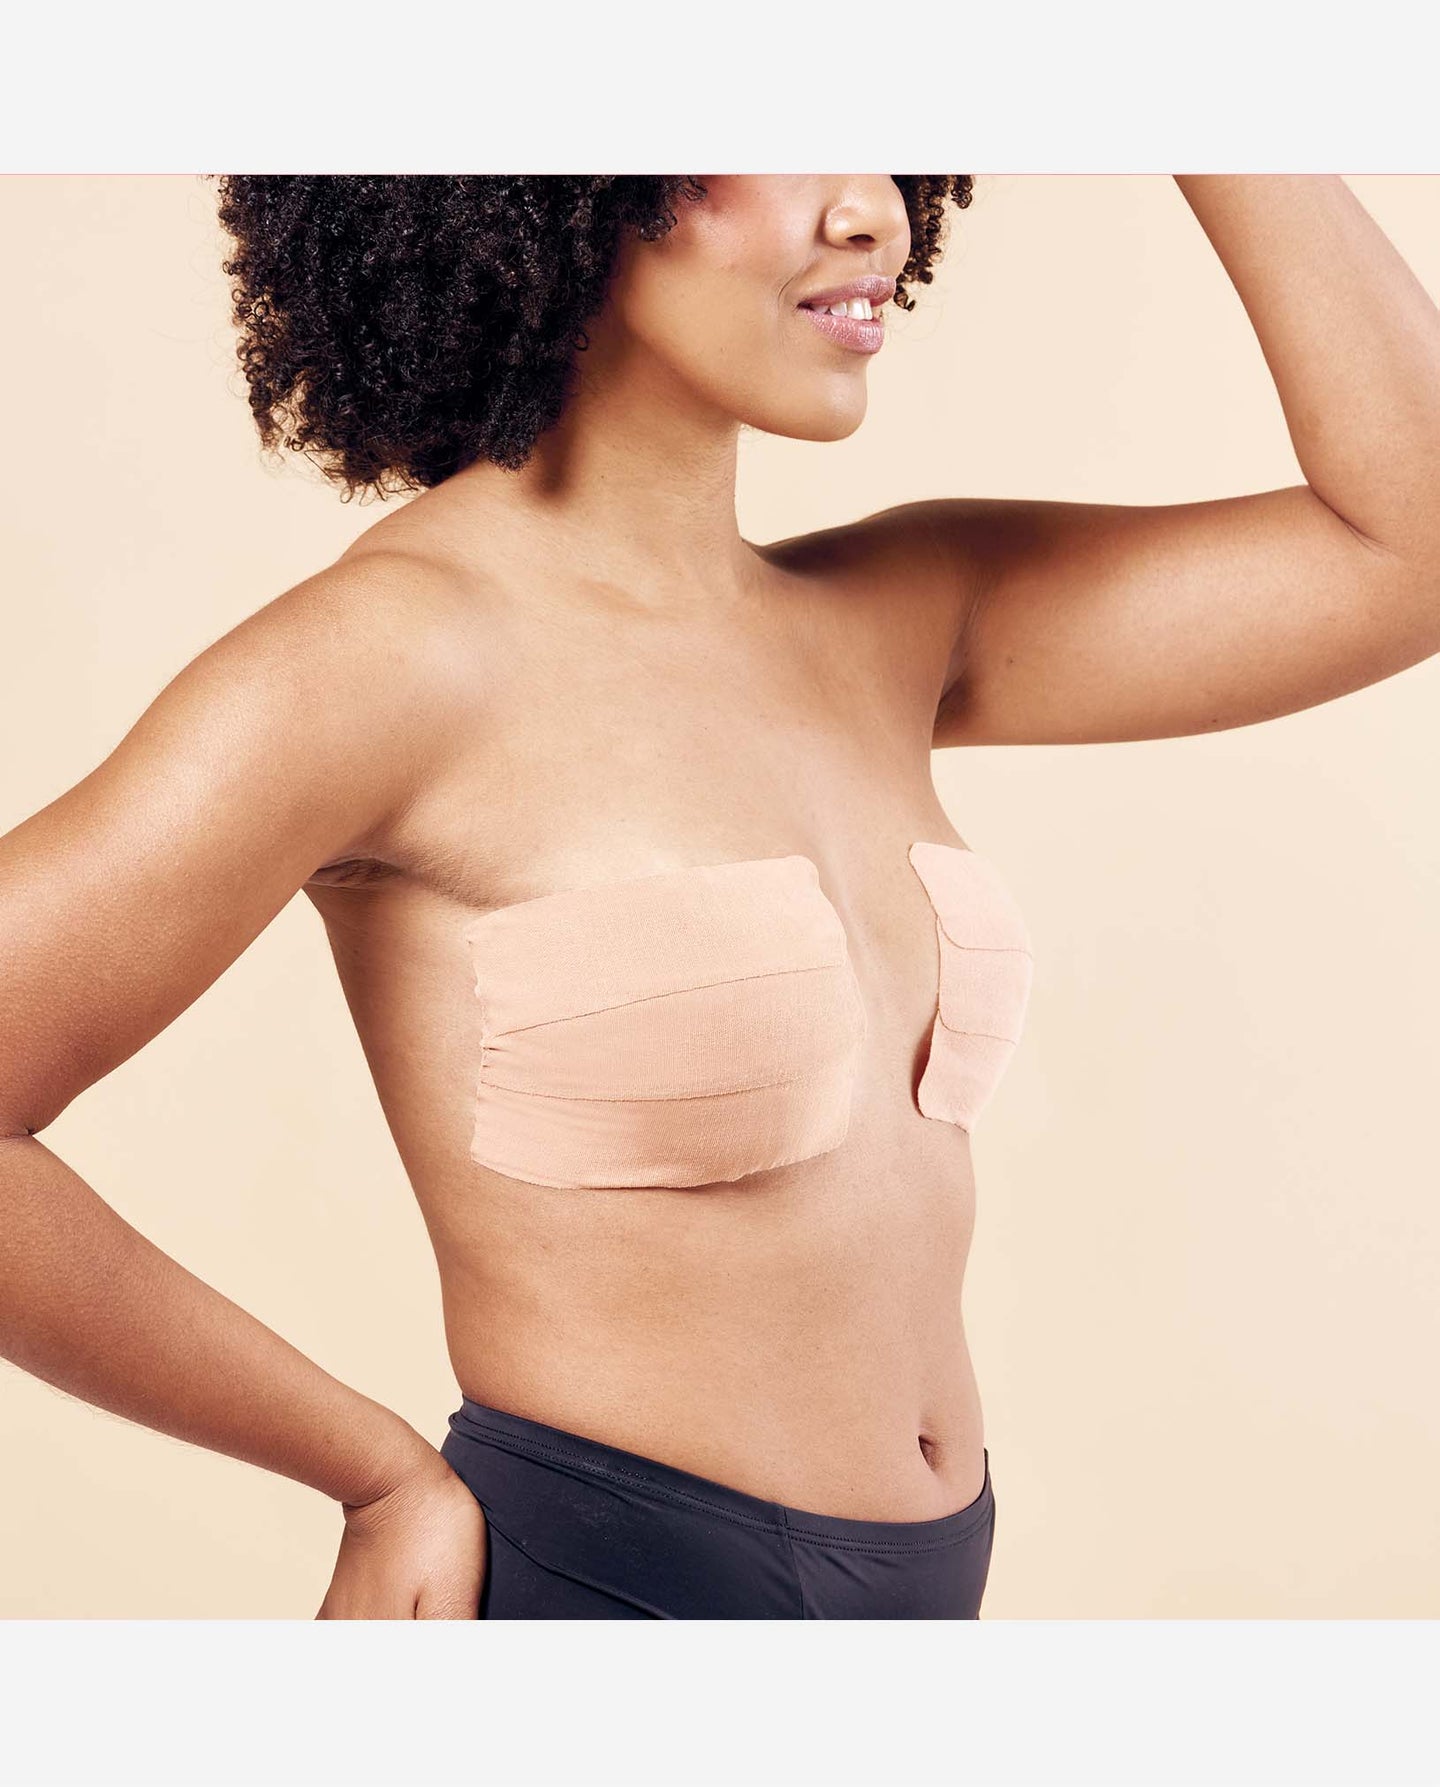 Risque XL Breast Lift Tape for Lift & Fashion - Bra Alternative of Breasts  (Black)